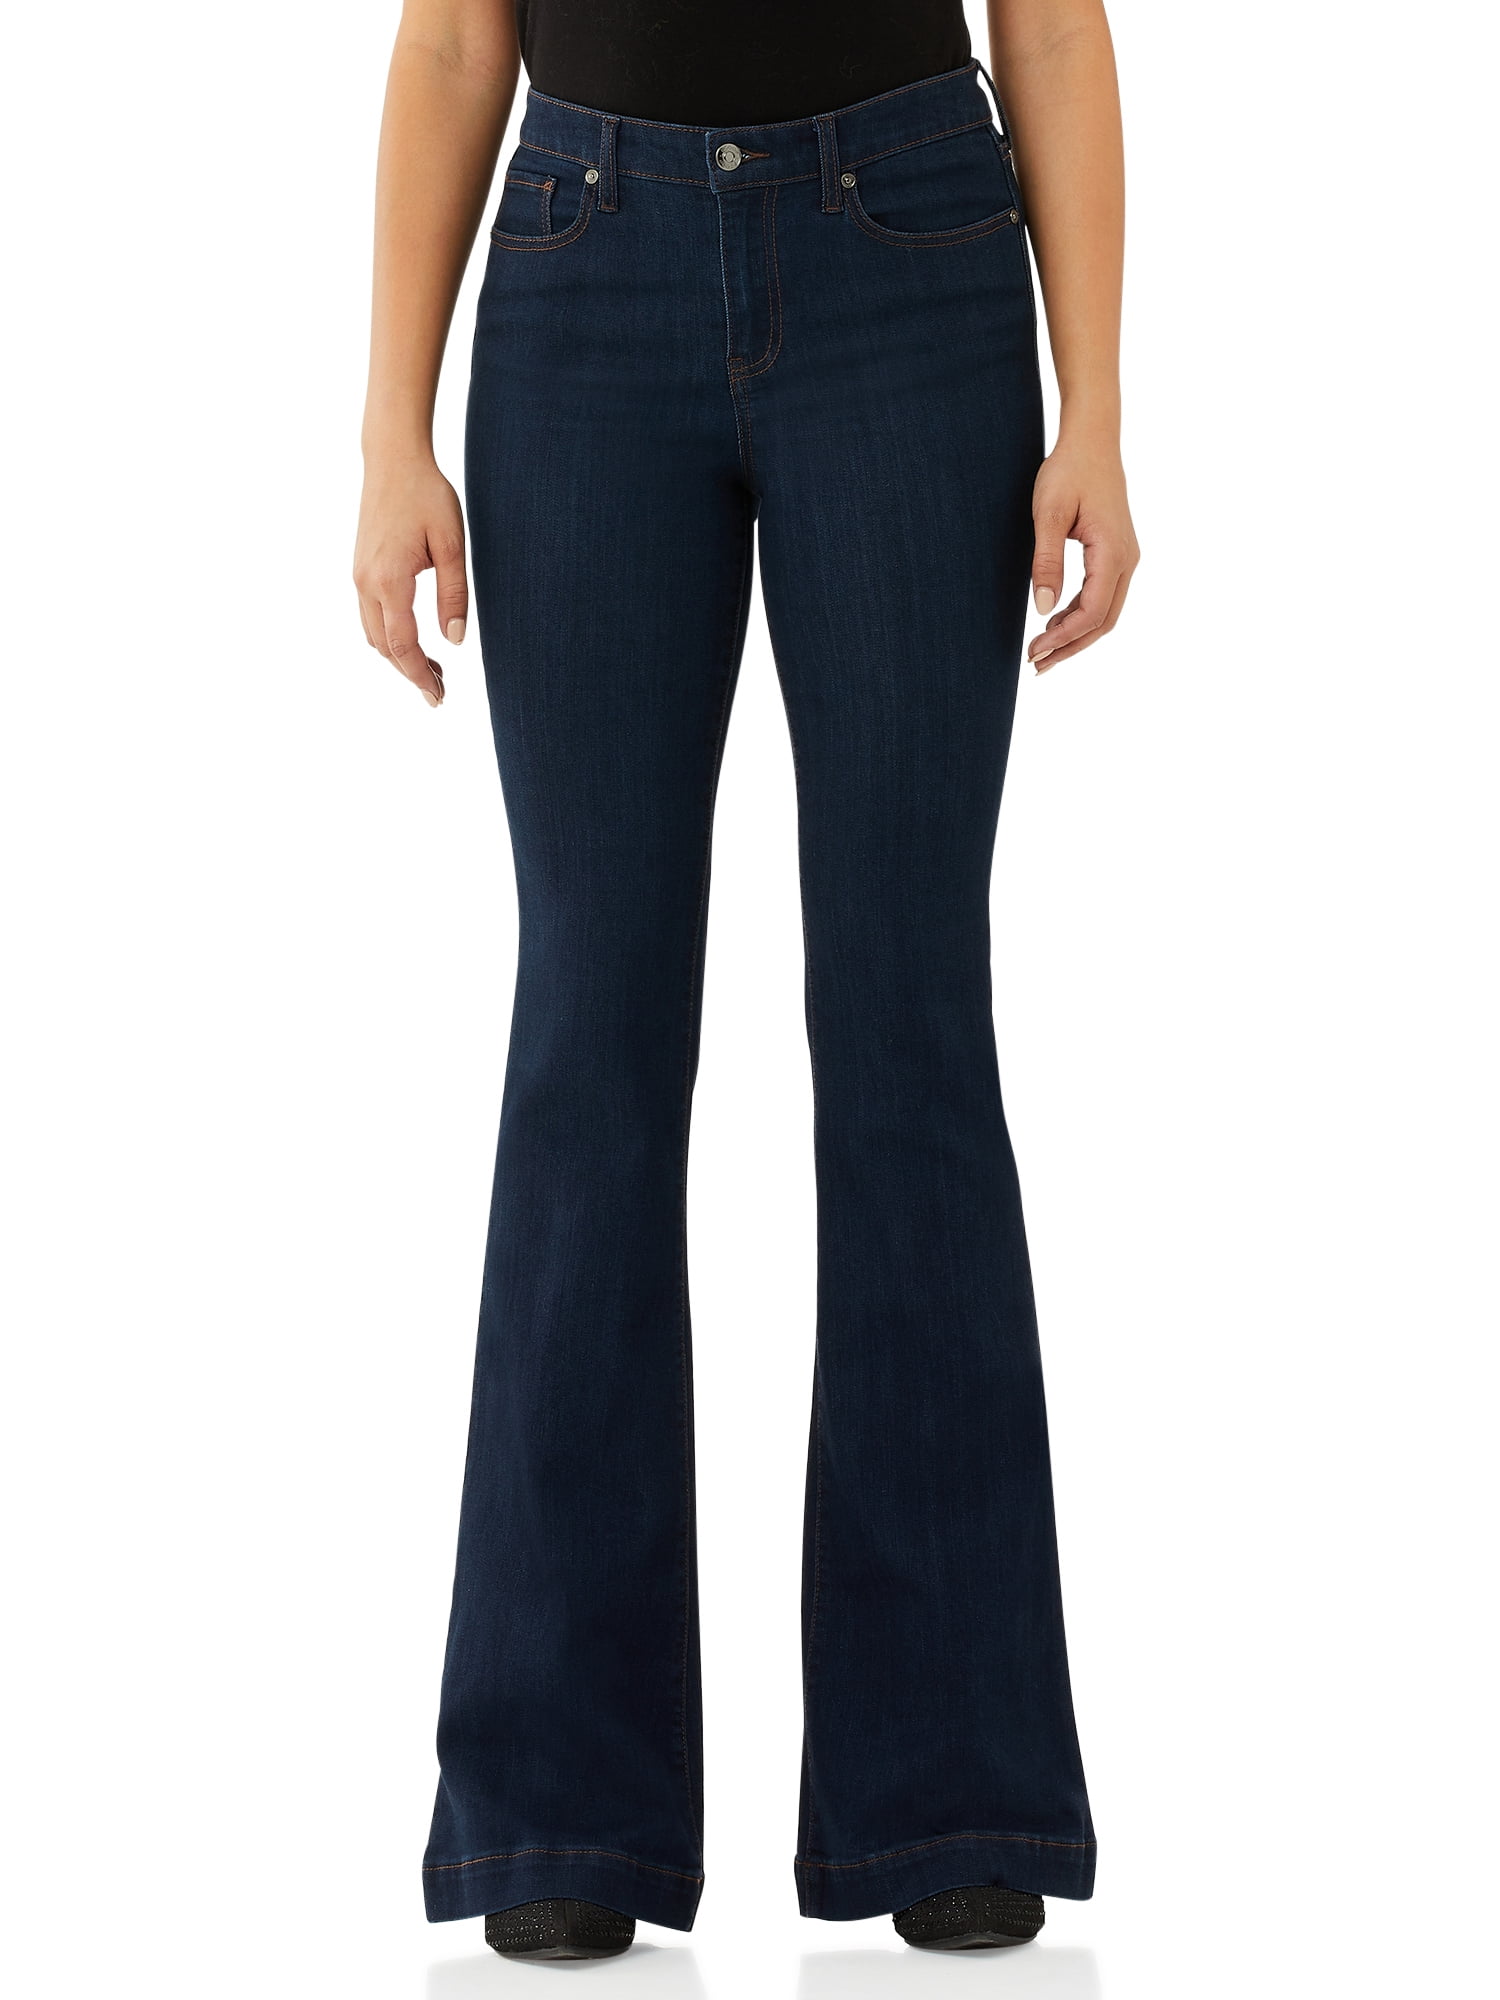 Scoop Women’s Super Polished Flare Jeans - Walmart.com